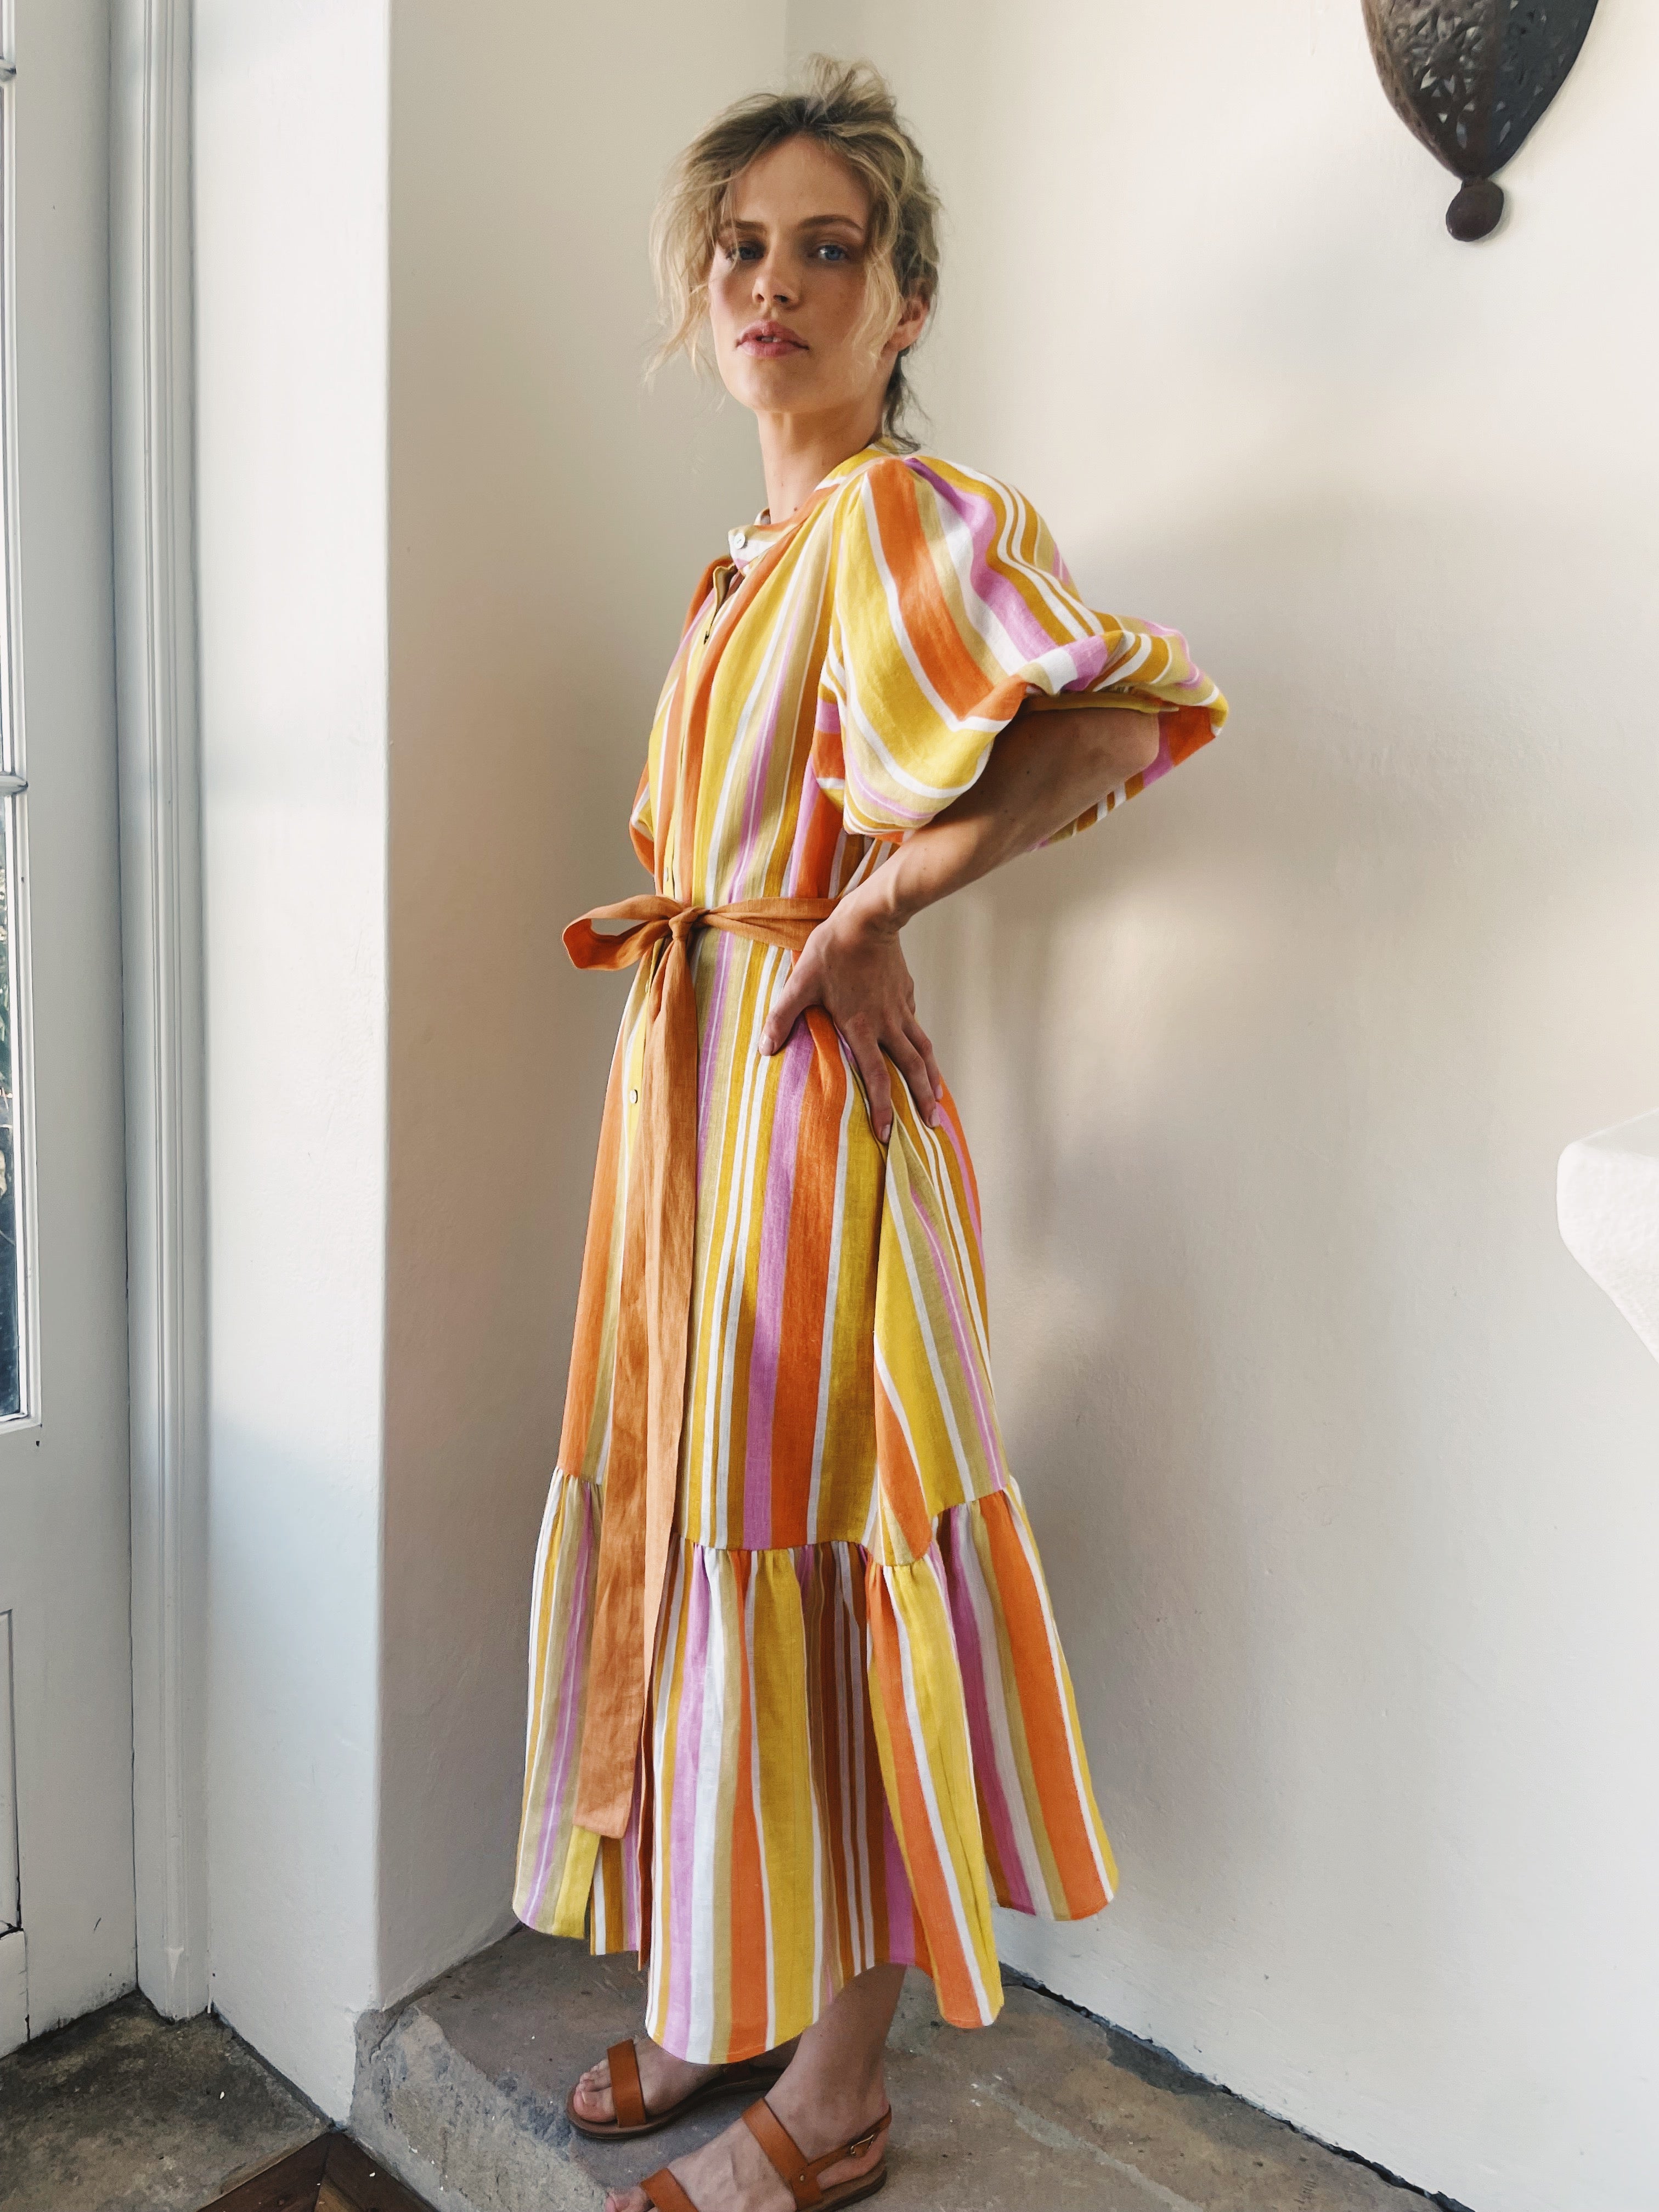 I'd Rather Be In Capri Yellow Stripe Dress